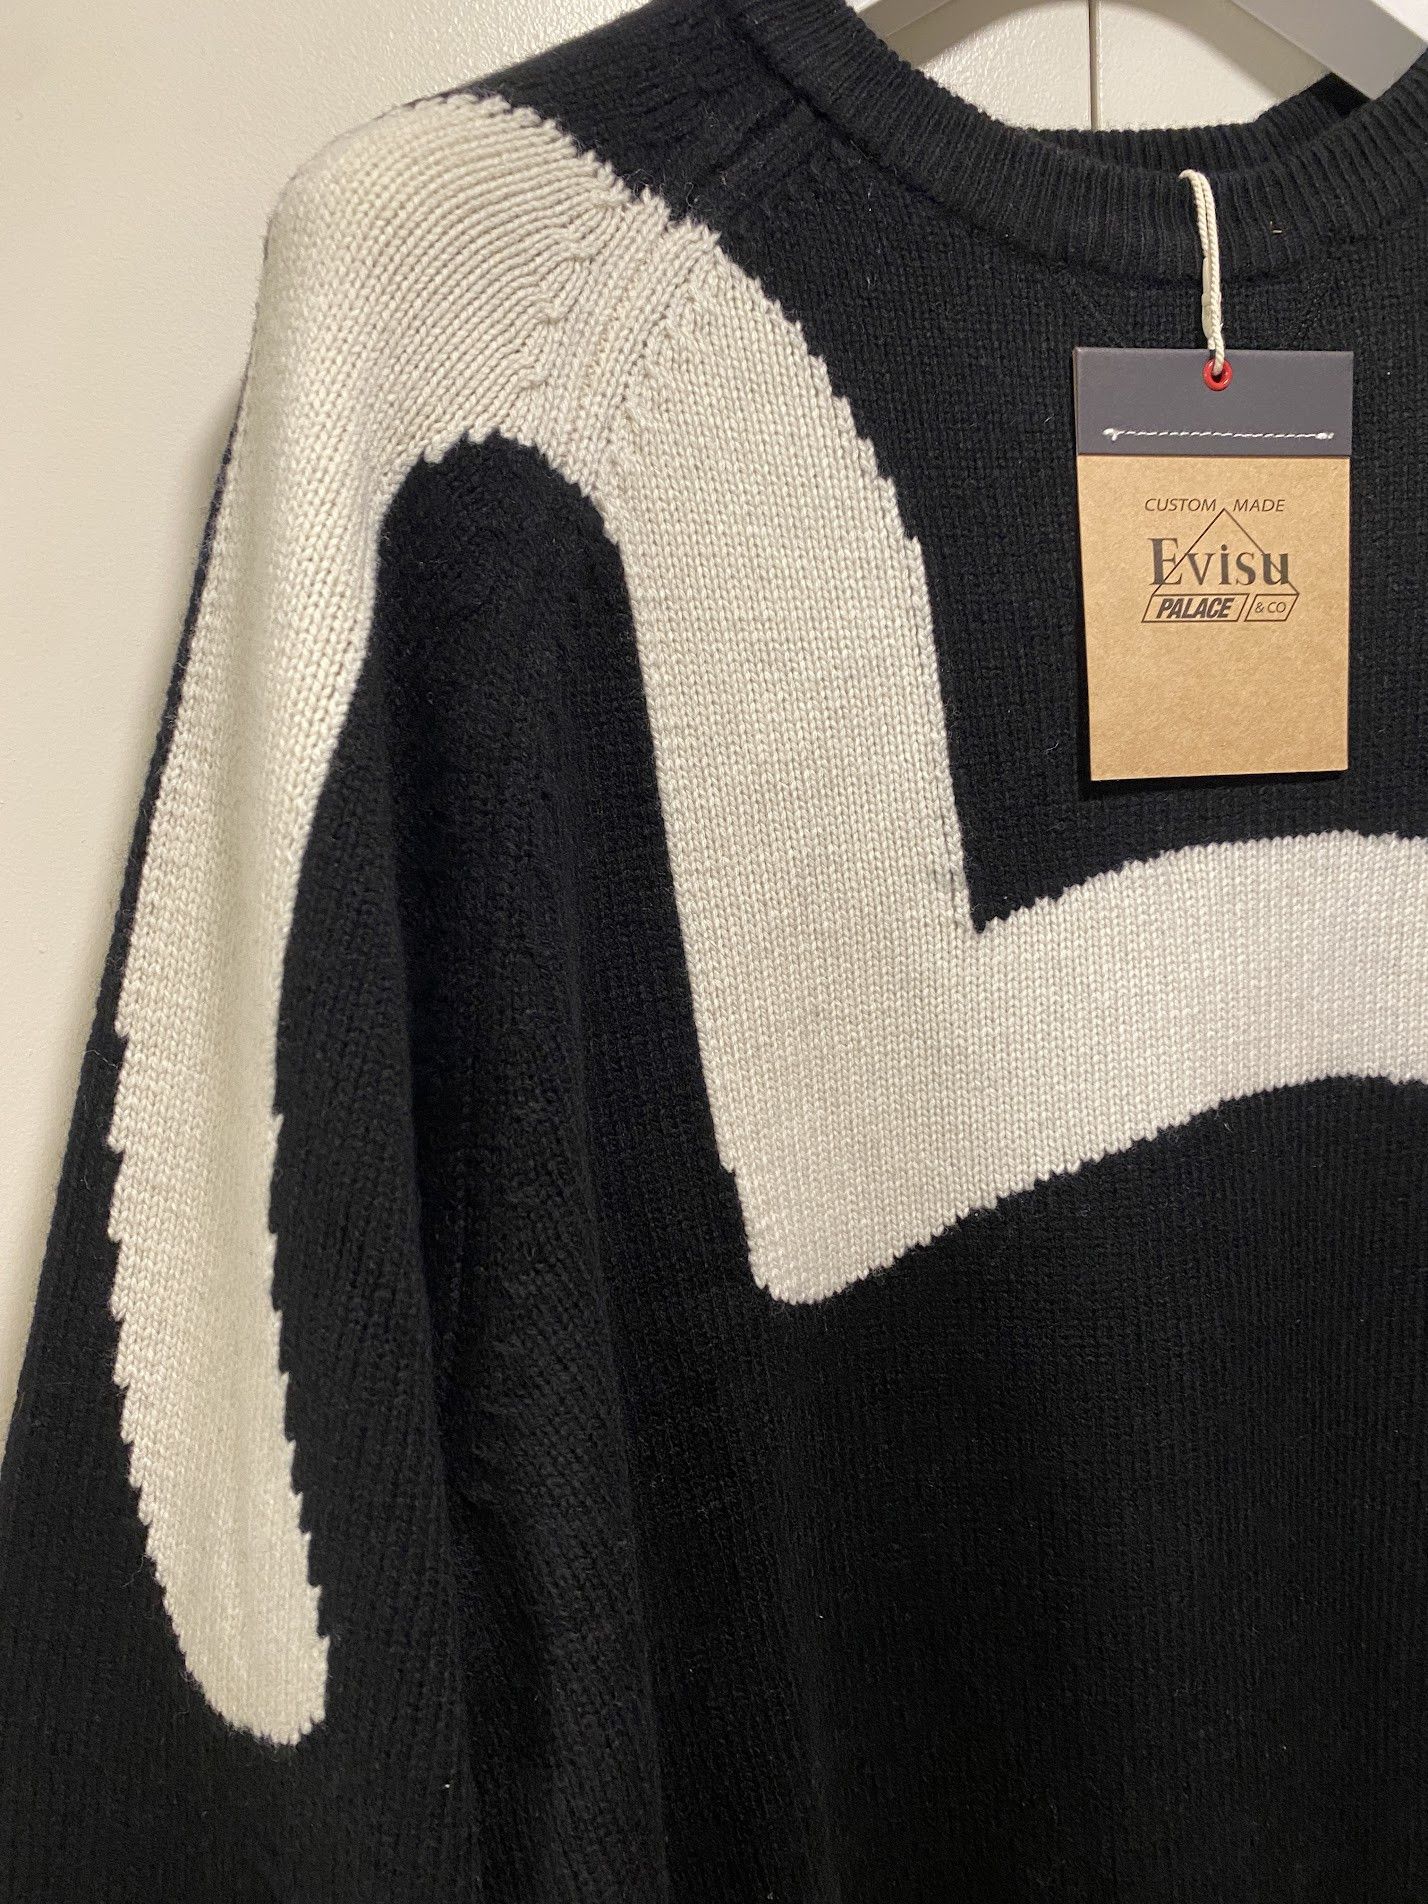 Palace Palace Evisu Seagull knit Black Sweater size Large Size US L / EU 52-54 / 3 - 2 Preview